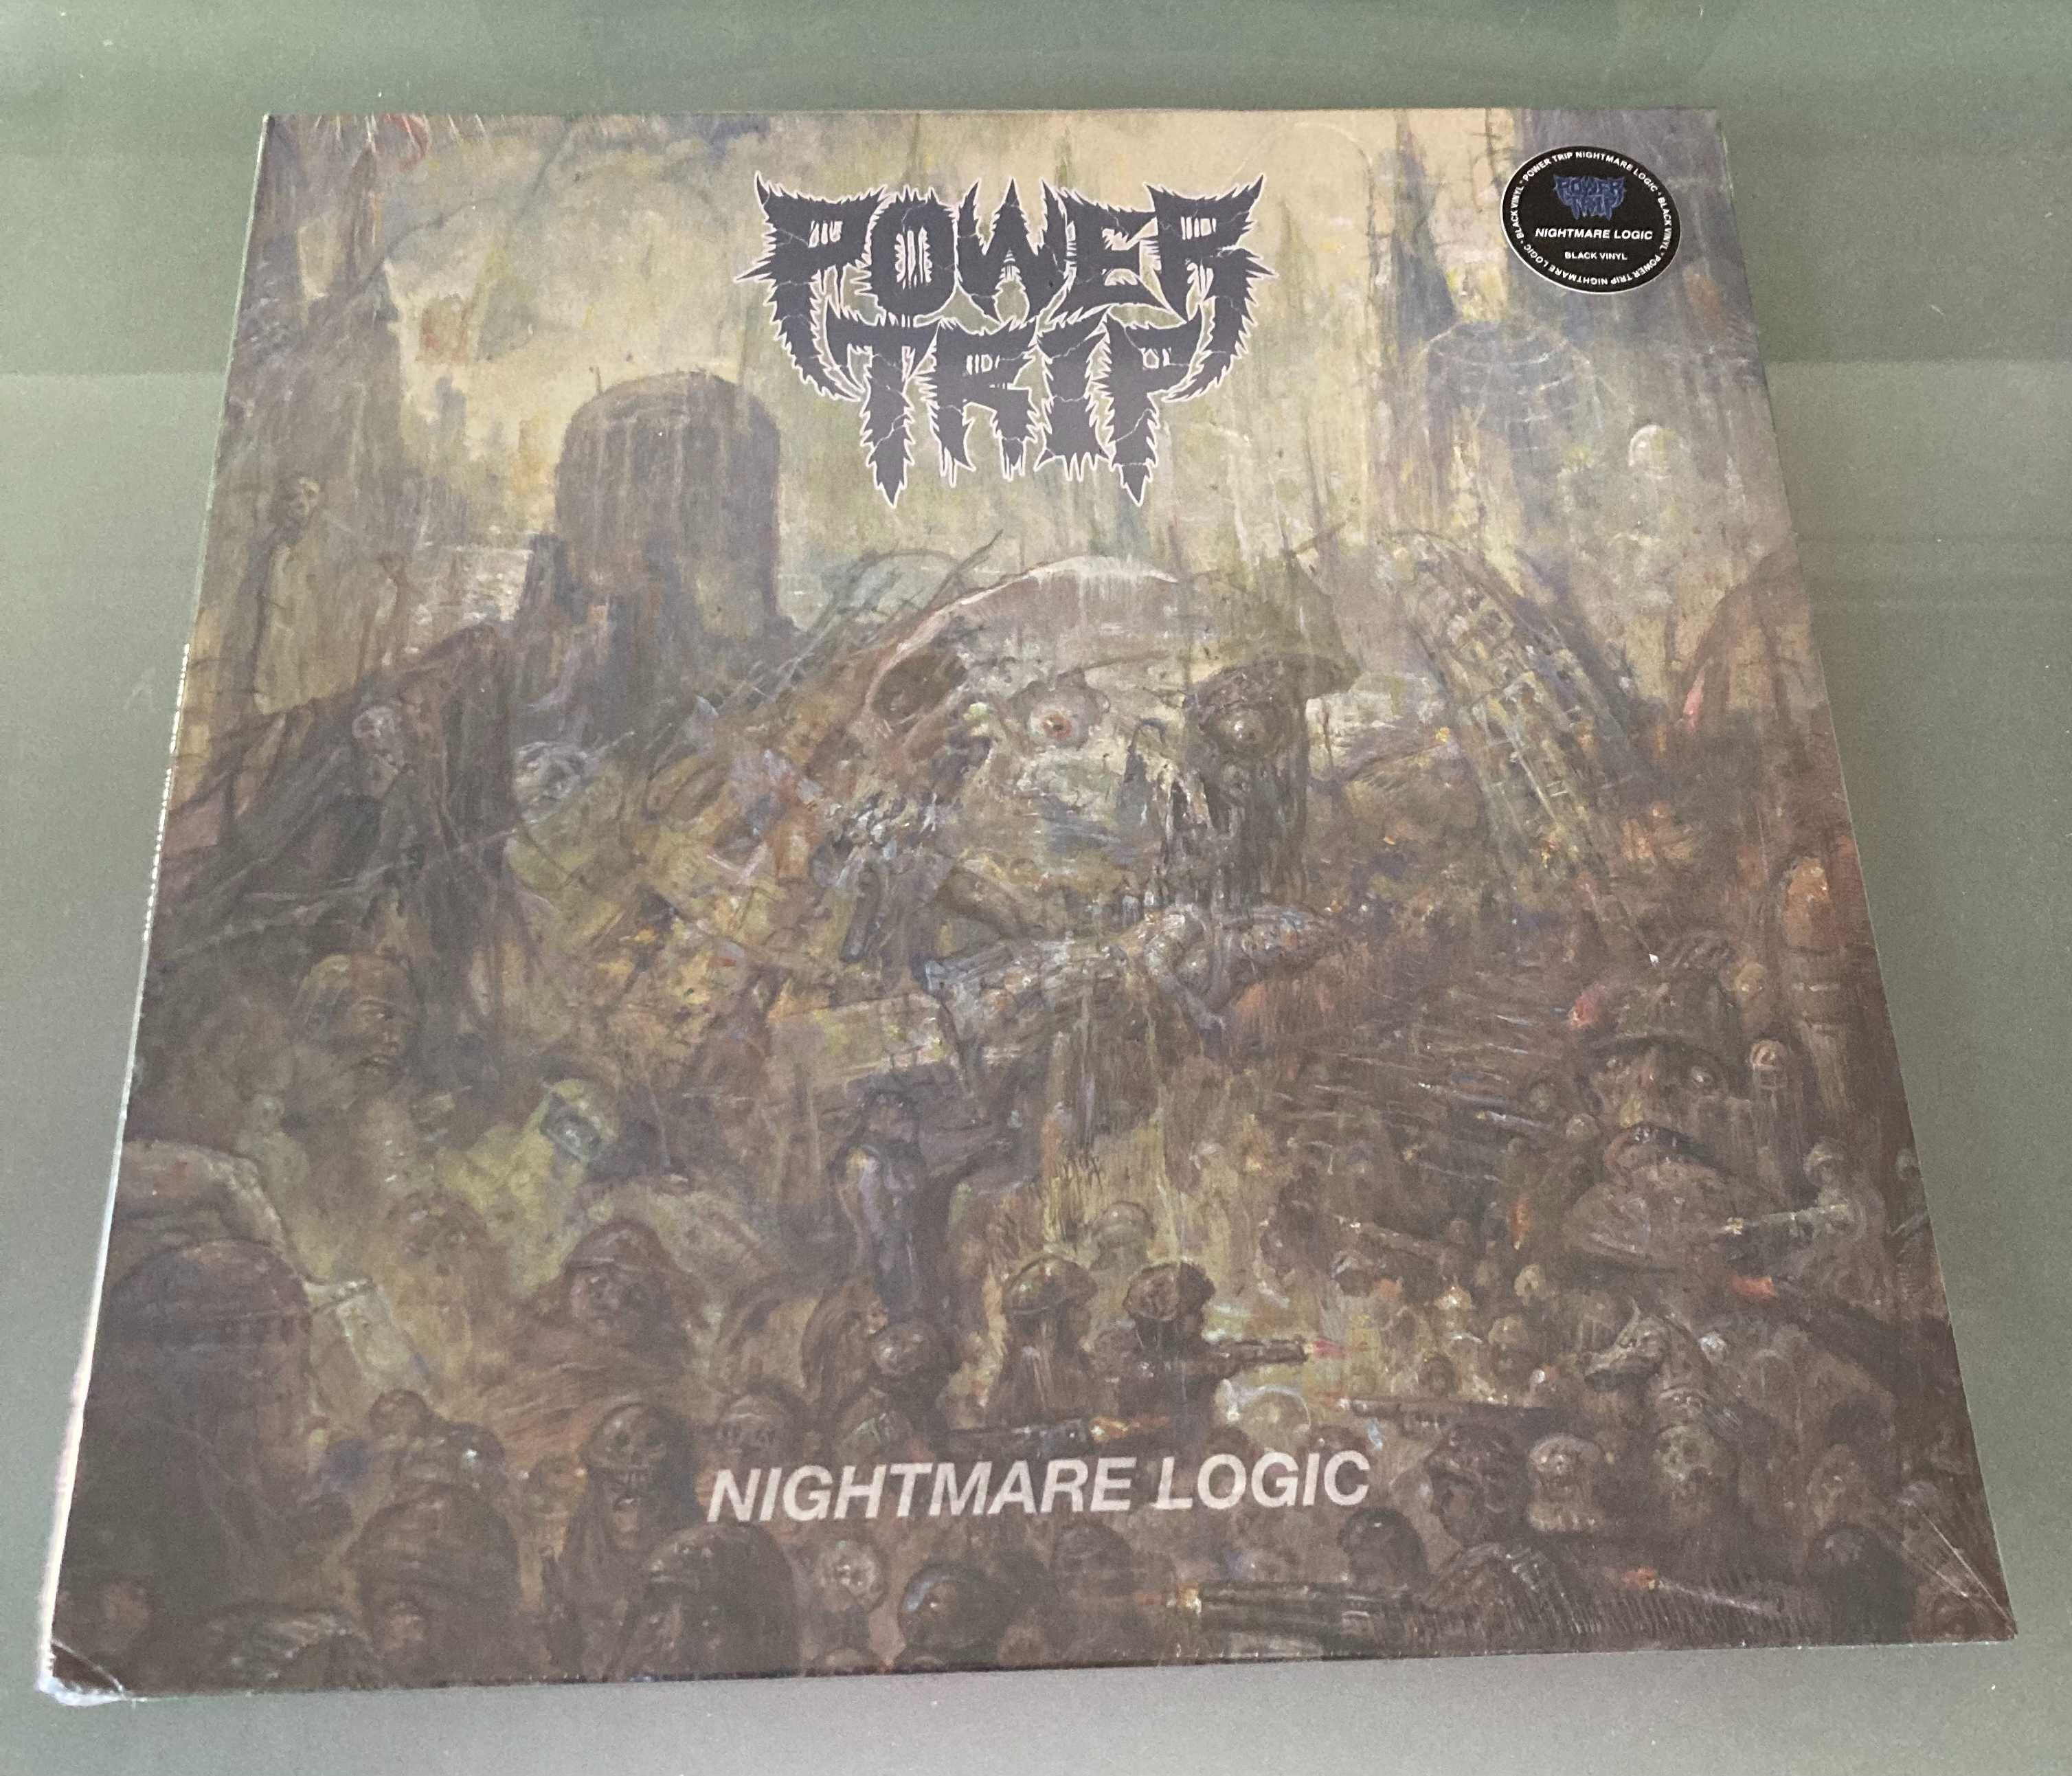 Power Trip - Nightmare Logic LP